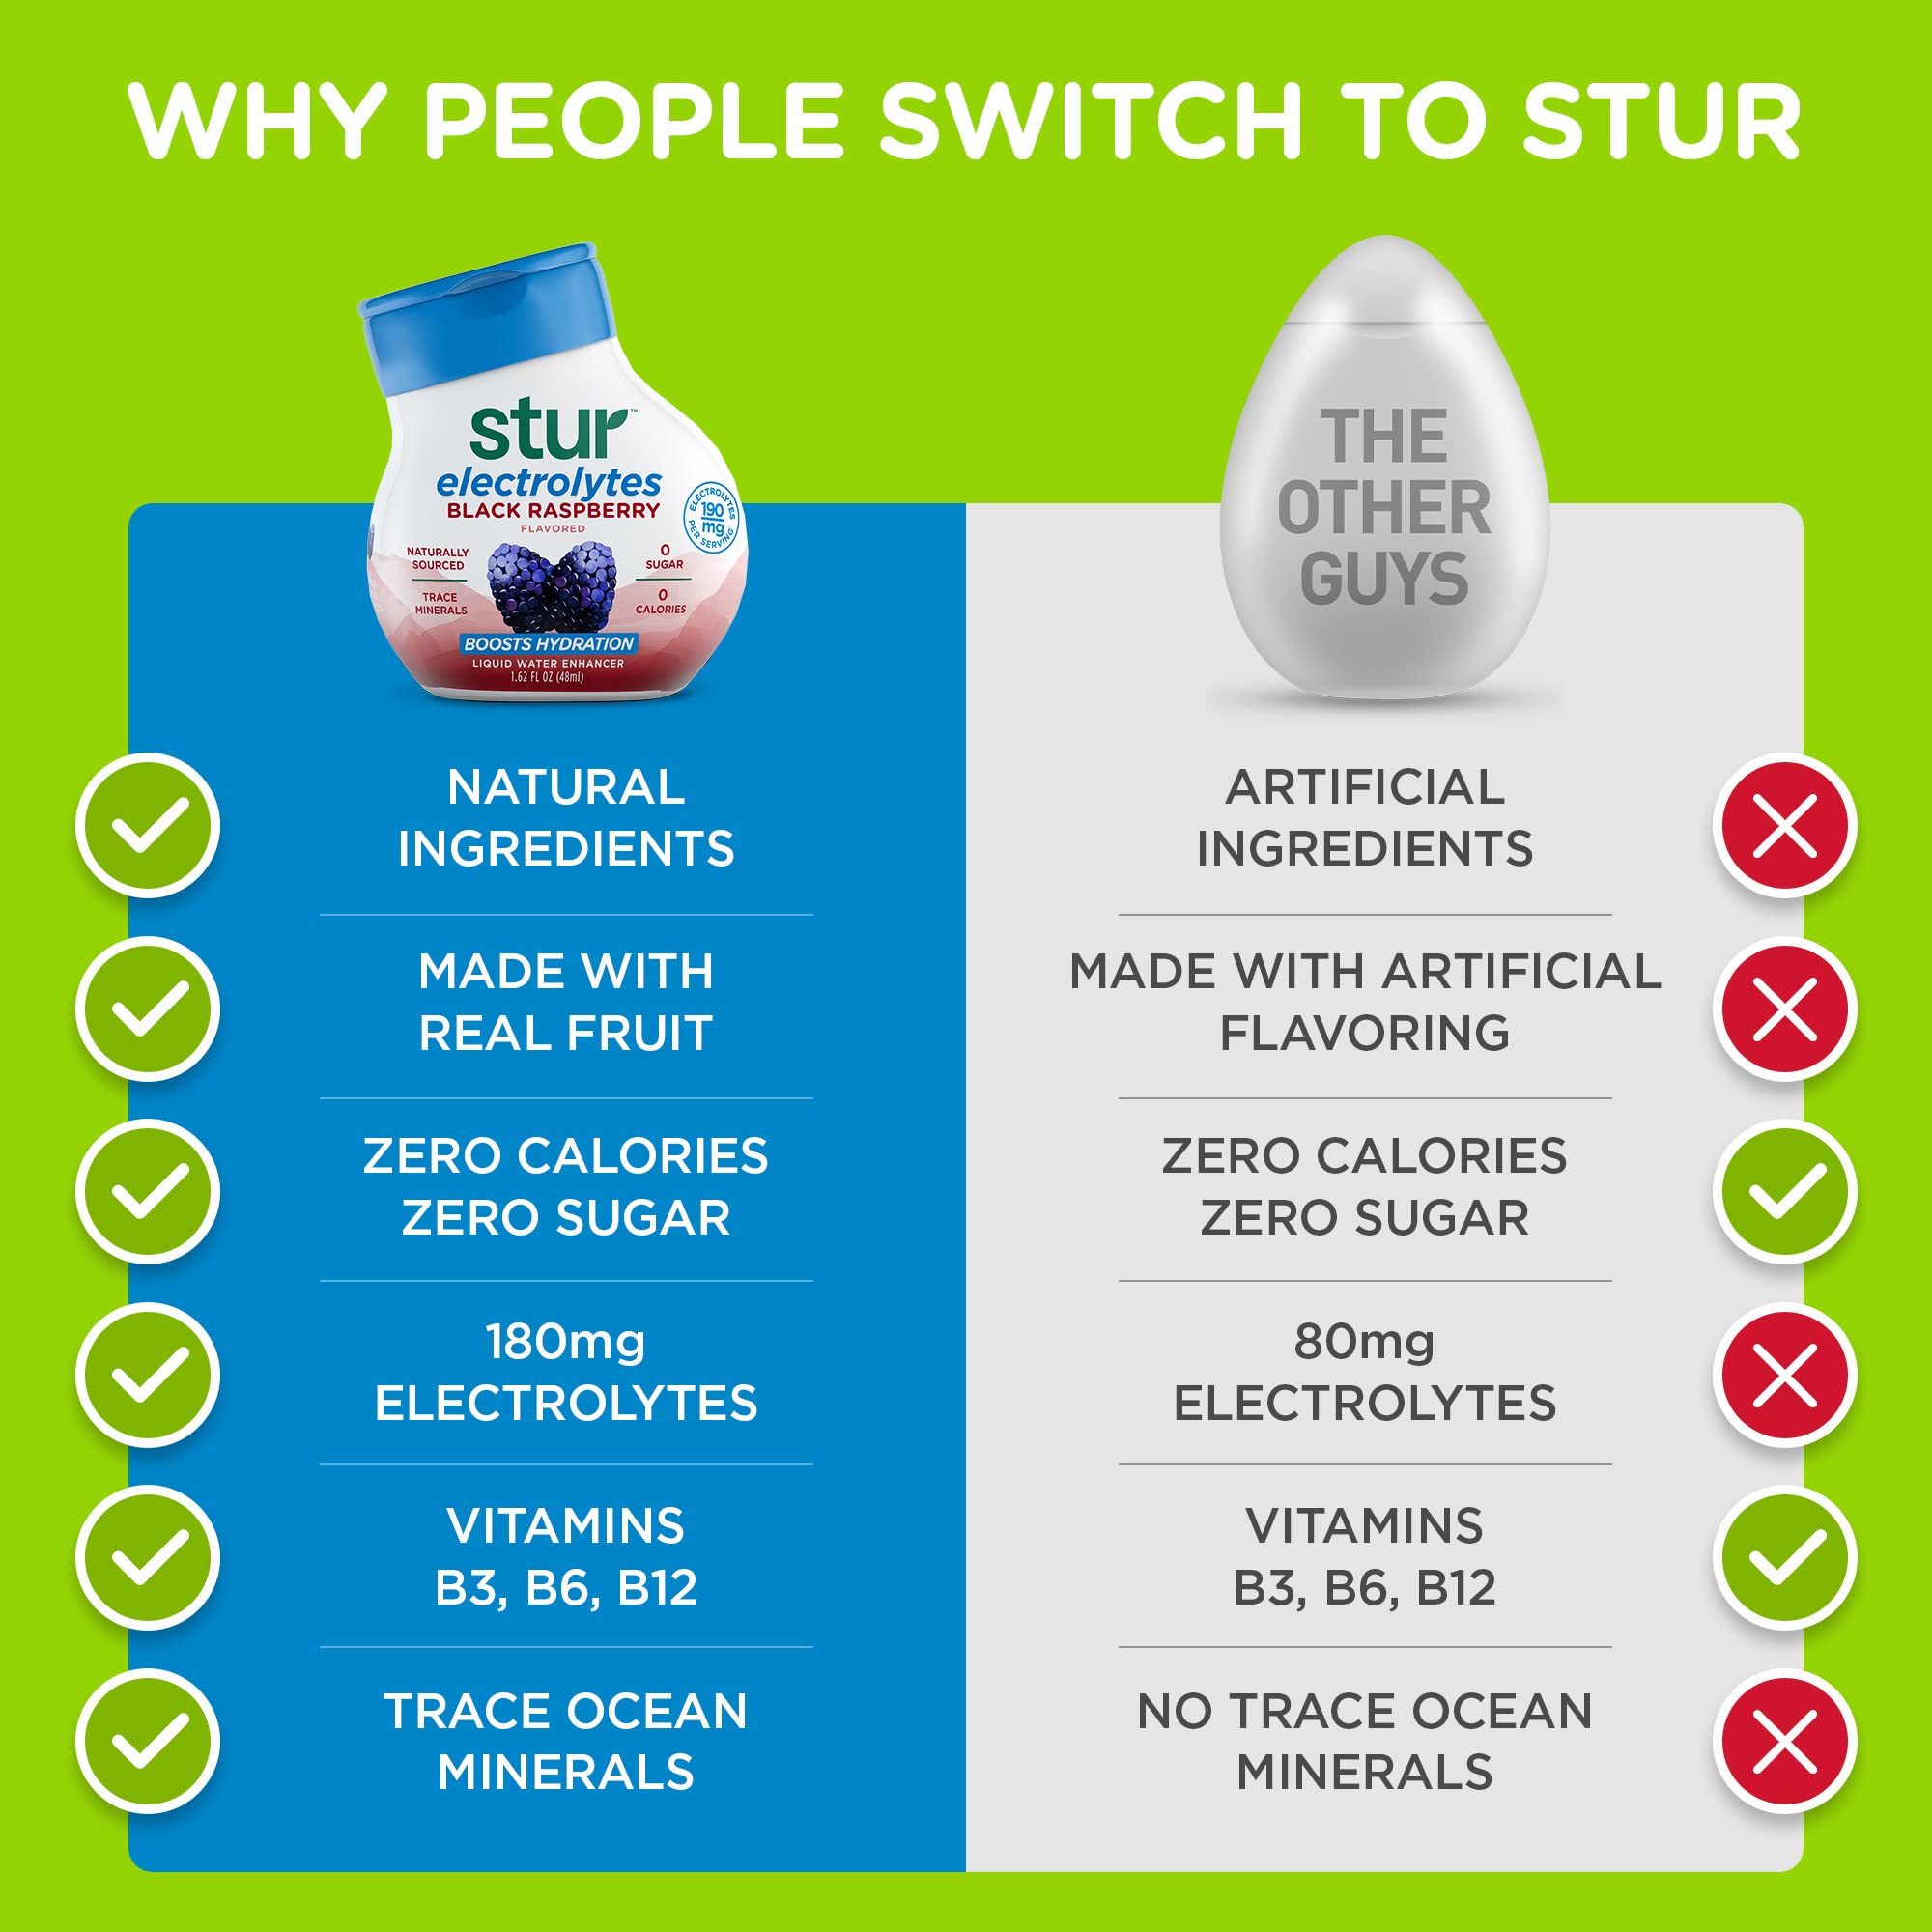 Stur Electrolyte Water Enhancer | Sweetened with Stevia | High in Vitamin C & Antioxidants | Sugar Free | Zero Calories | Keto | Vegan | 5 Bottles, Makes 120 Drinks (Black Raspberry)